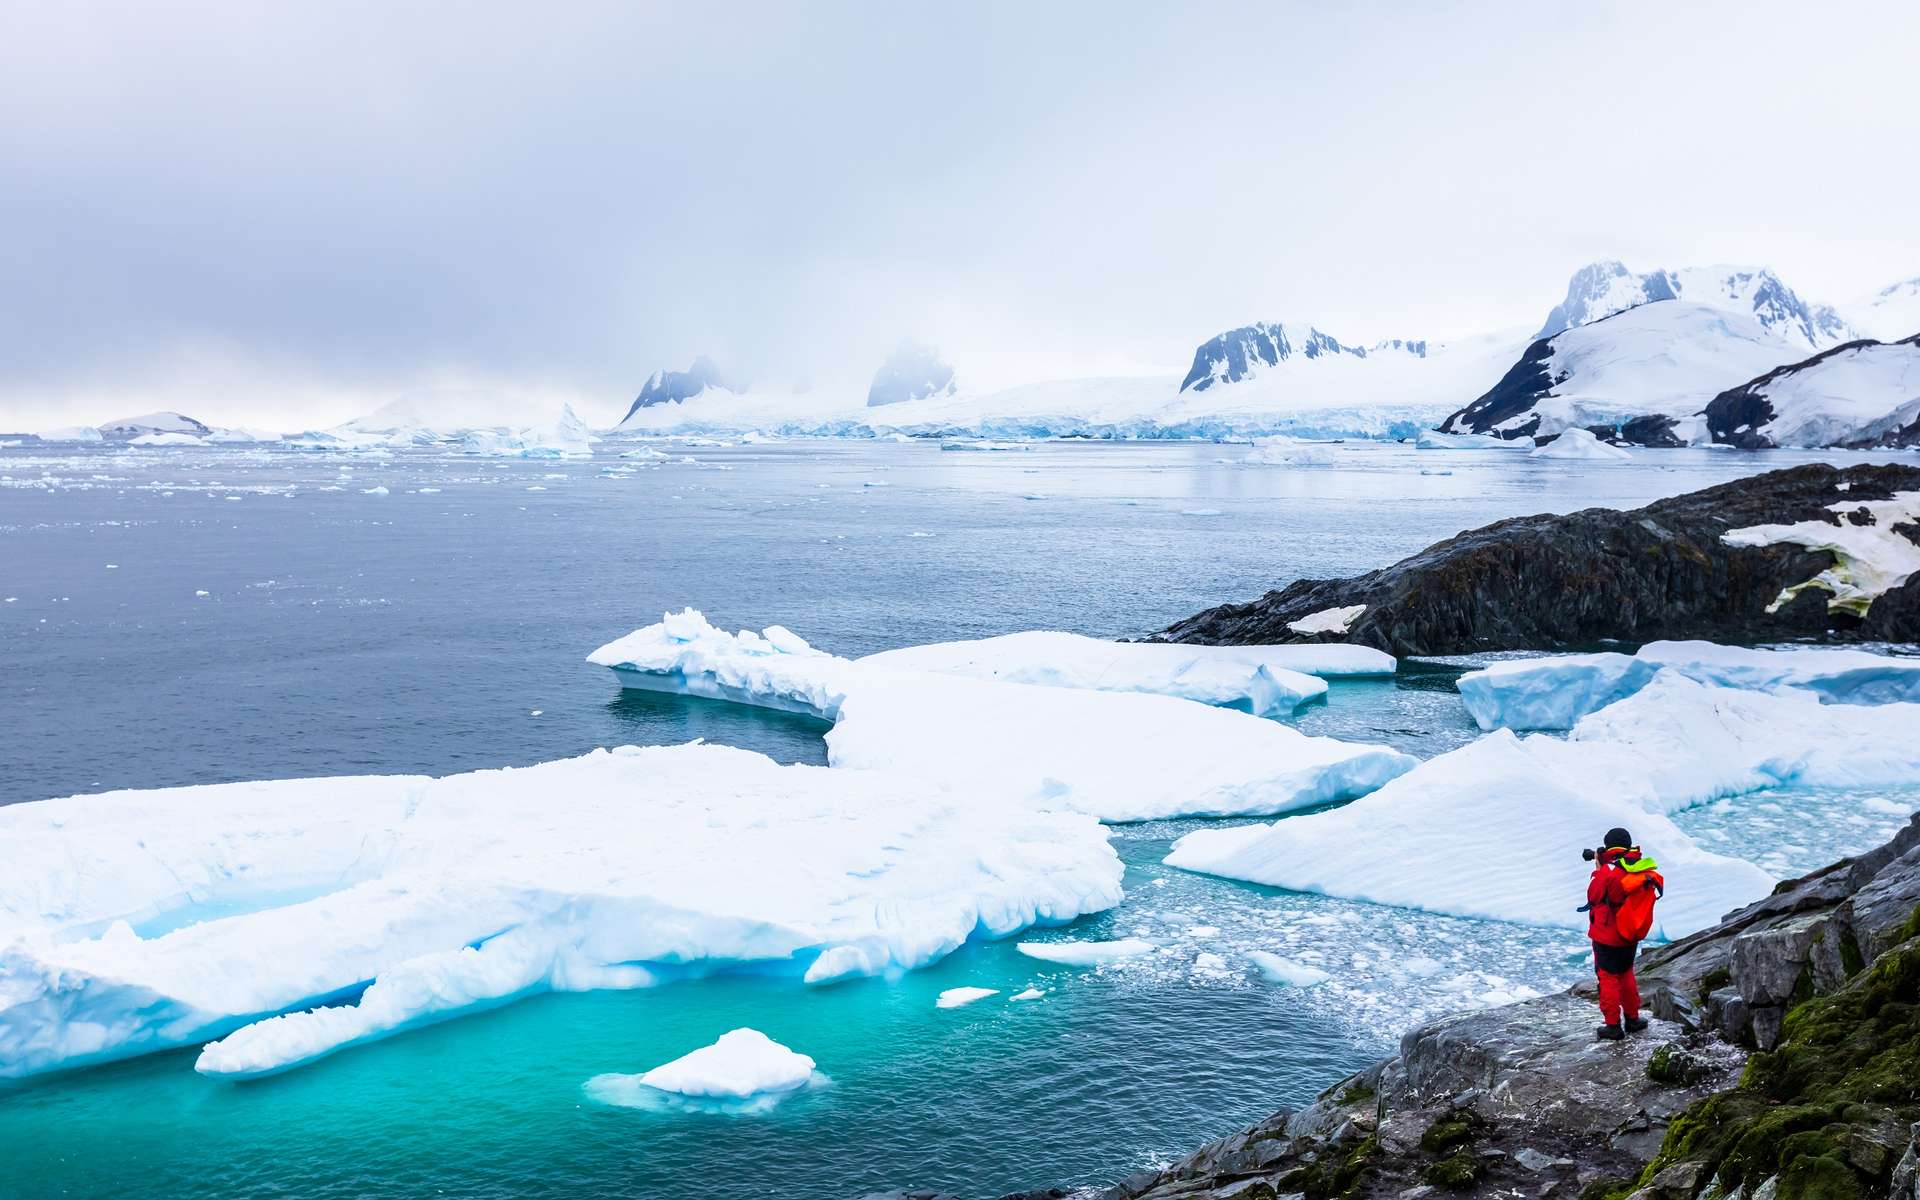 Les 5 signes qui montrent que l'Antarctique change radicalement